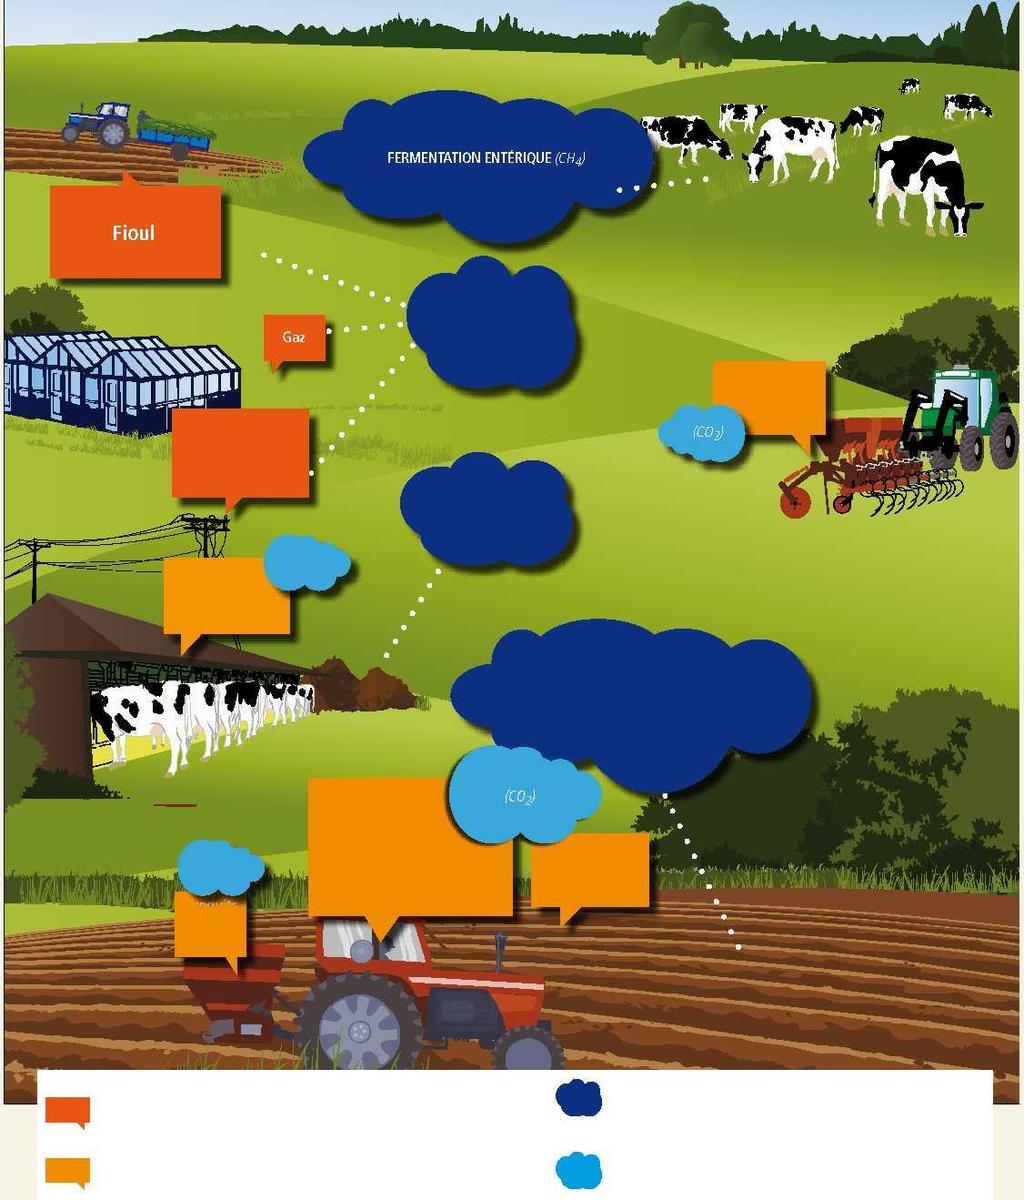 Enteric Fermentation Fuel Gas Energy (CO 2 ) Equipment Electricity Effluents (CH 4 /N 2 O) Livestock food CO 2 Agricultural Soils (N